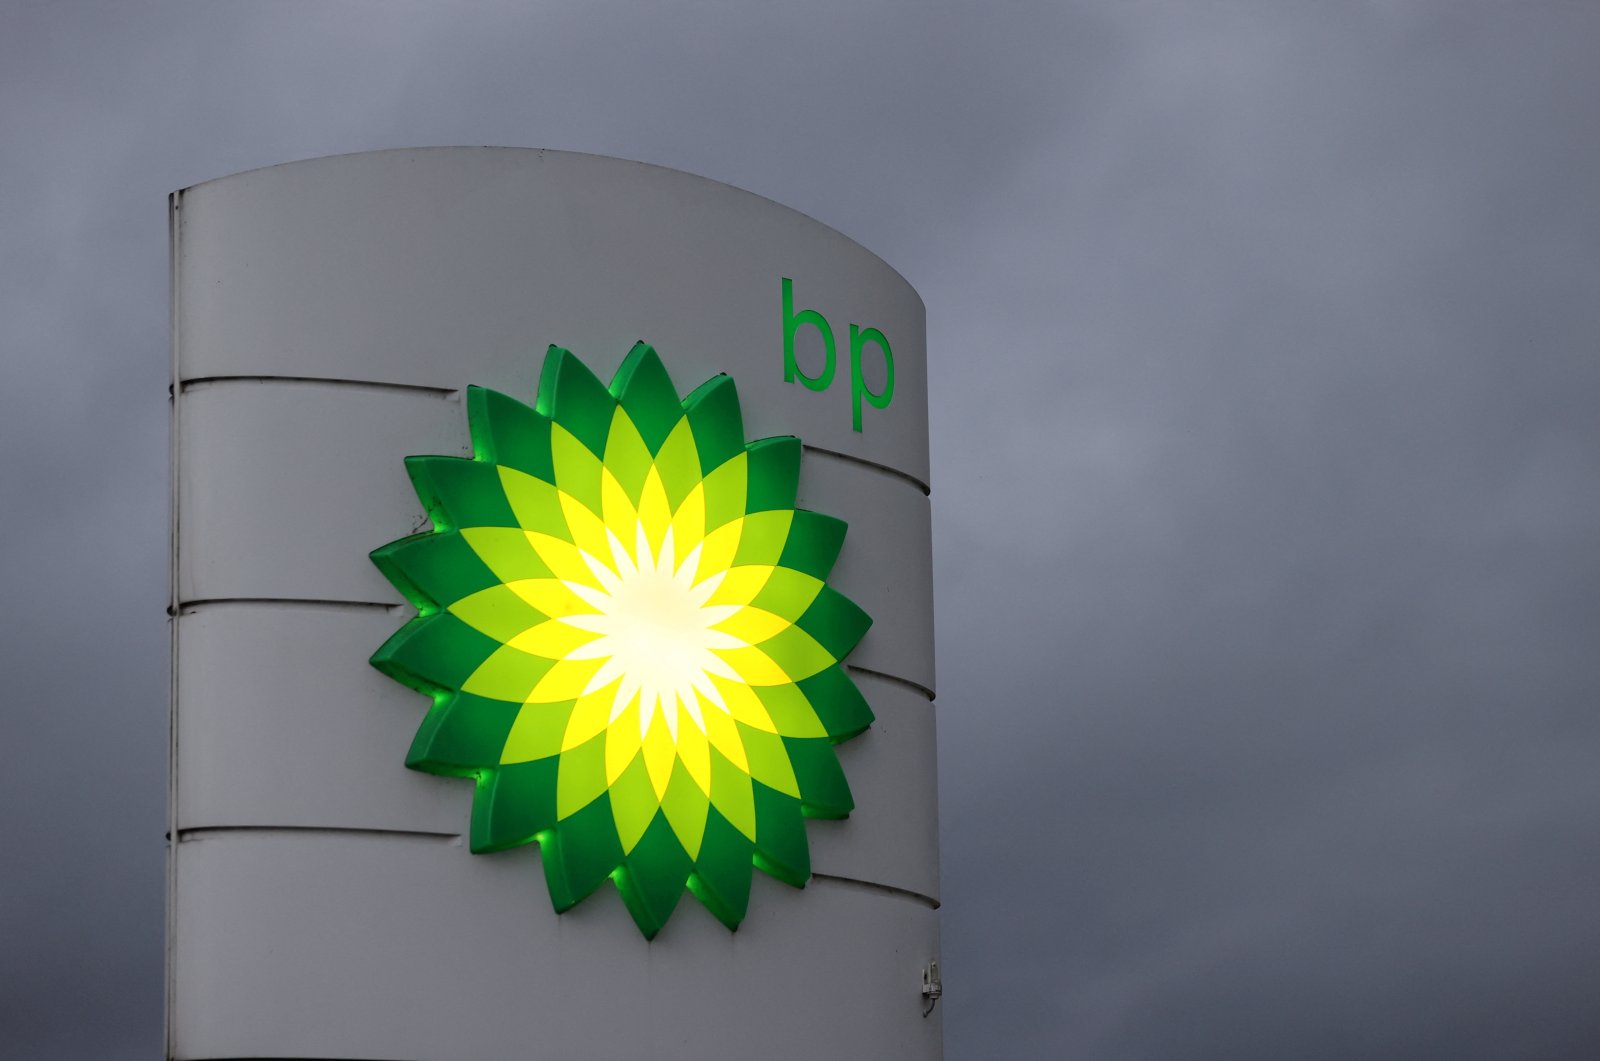 An illuminated BP logo is seen at a petrol station in Gateshead, Britain, Sept. 23, 2021. (Reuters Photo)